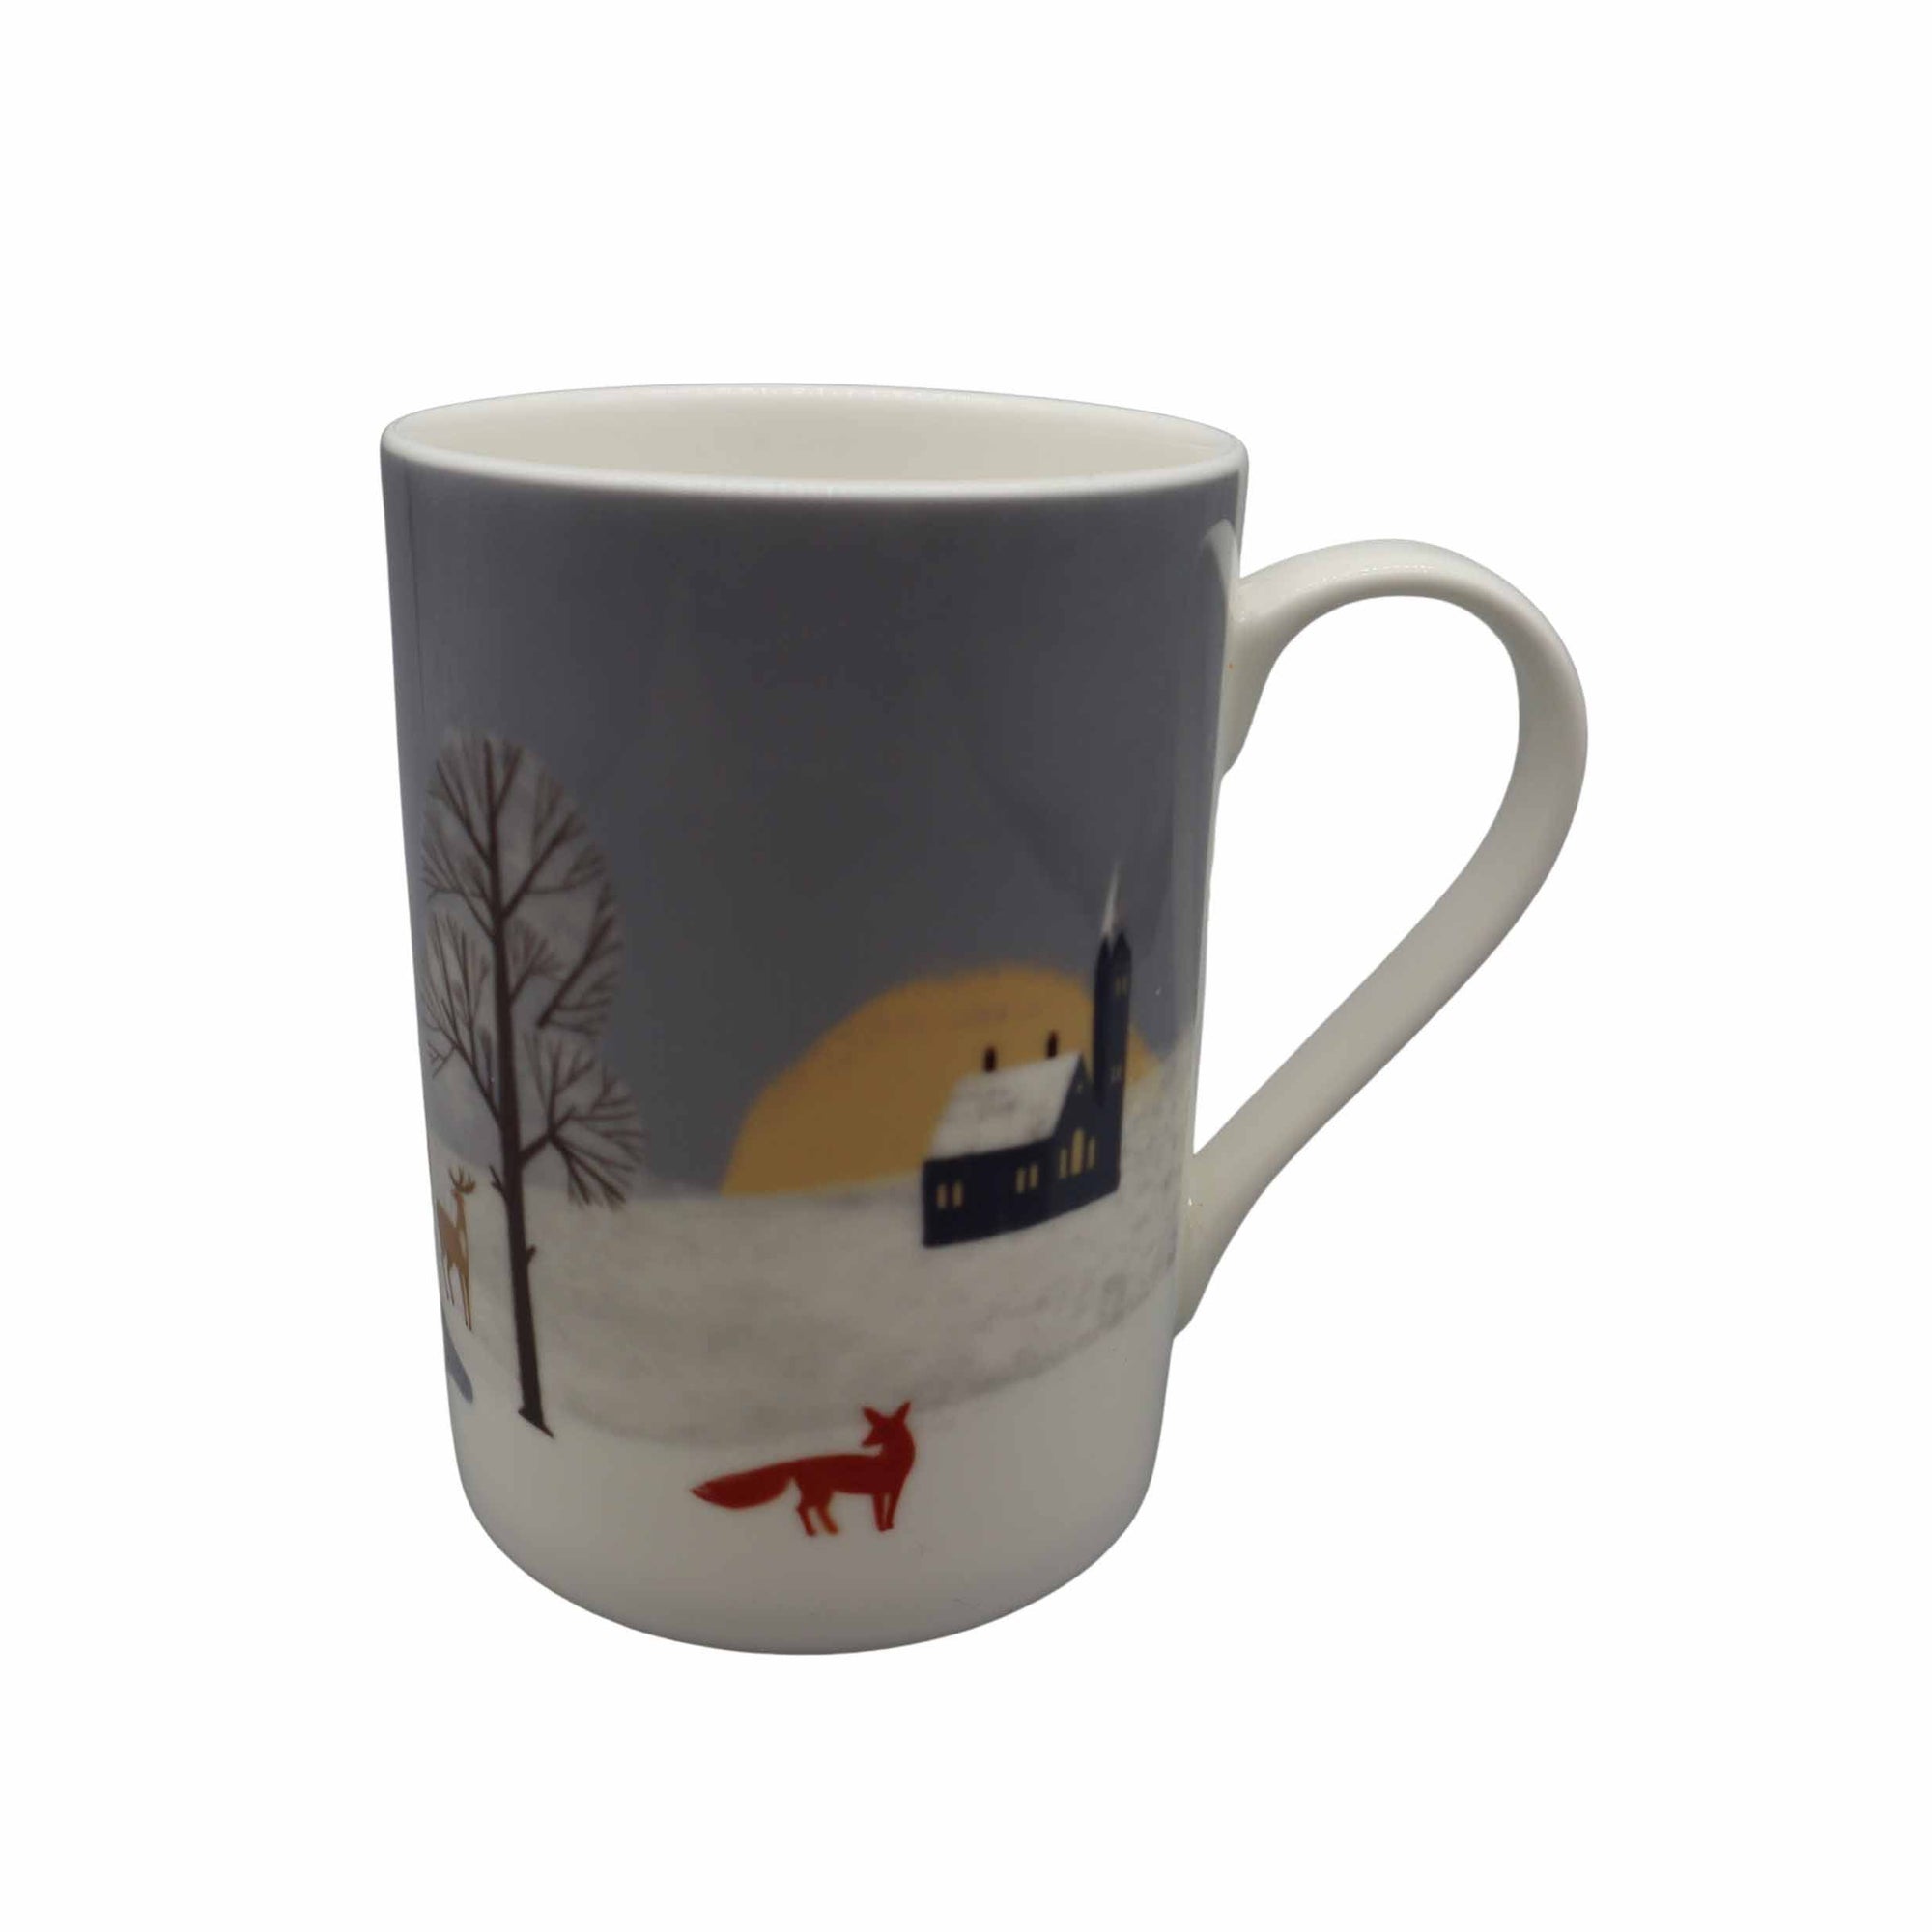 Winter Fox Day Mug Mugs Mustard and Gray Ltd Shropshire UK